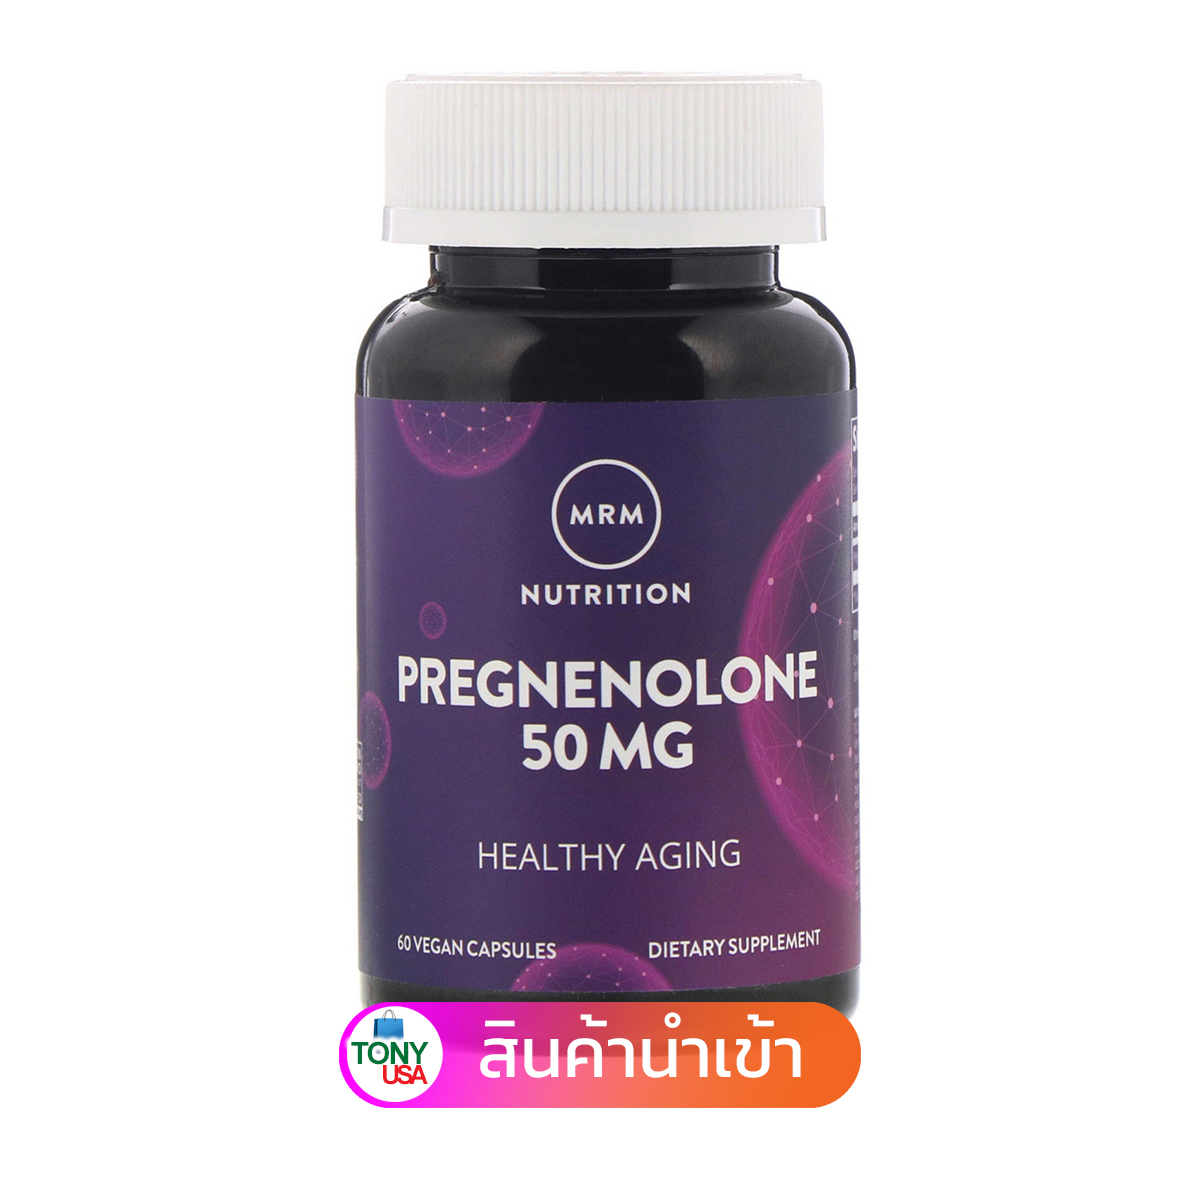 MRM, Nutrition, Pregnenolone, 50 mg, 60 Vegan Capsules, Anti-aging ชะลอวัย